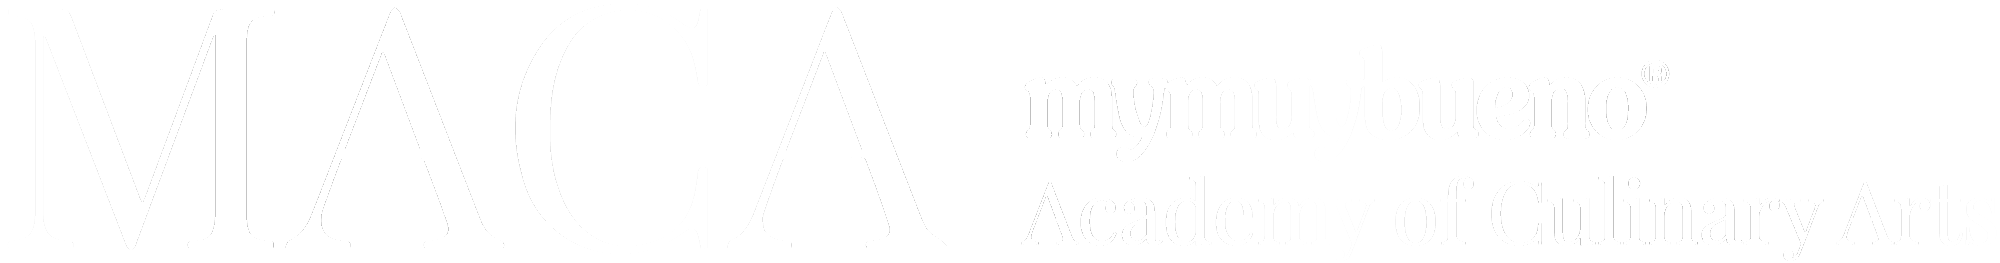 mymuybueno Academy of Culinary Arts